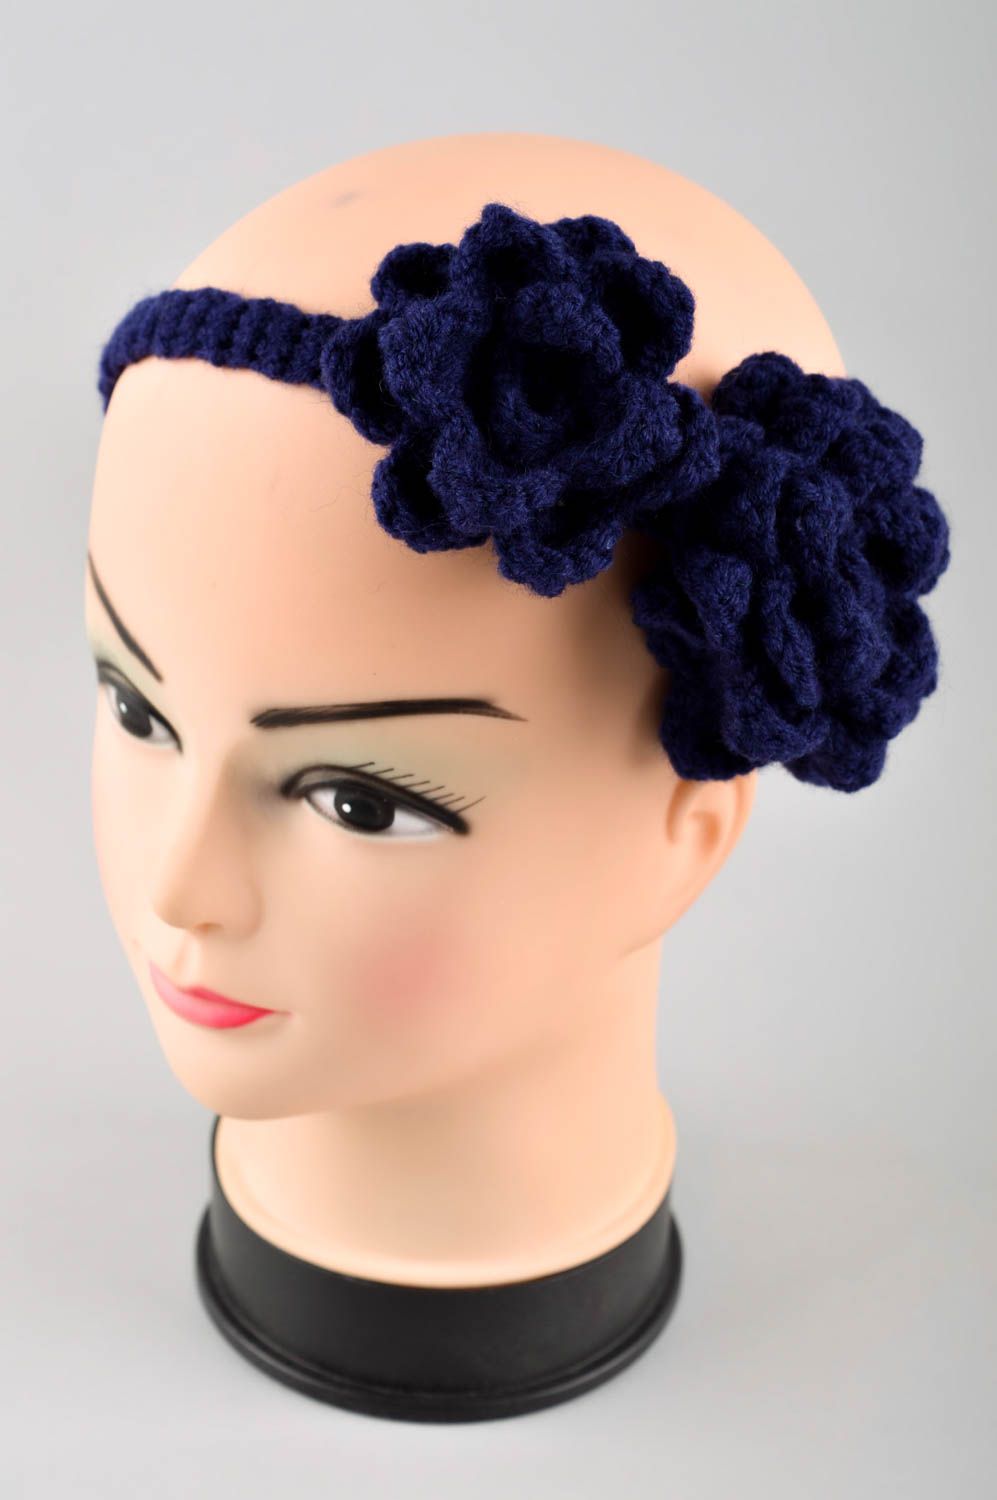 Handmade headband designer acessory gift ideas knitted hedband for girls photo 2